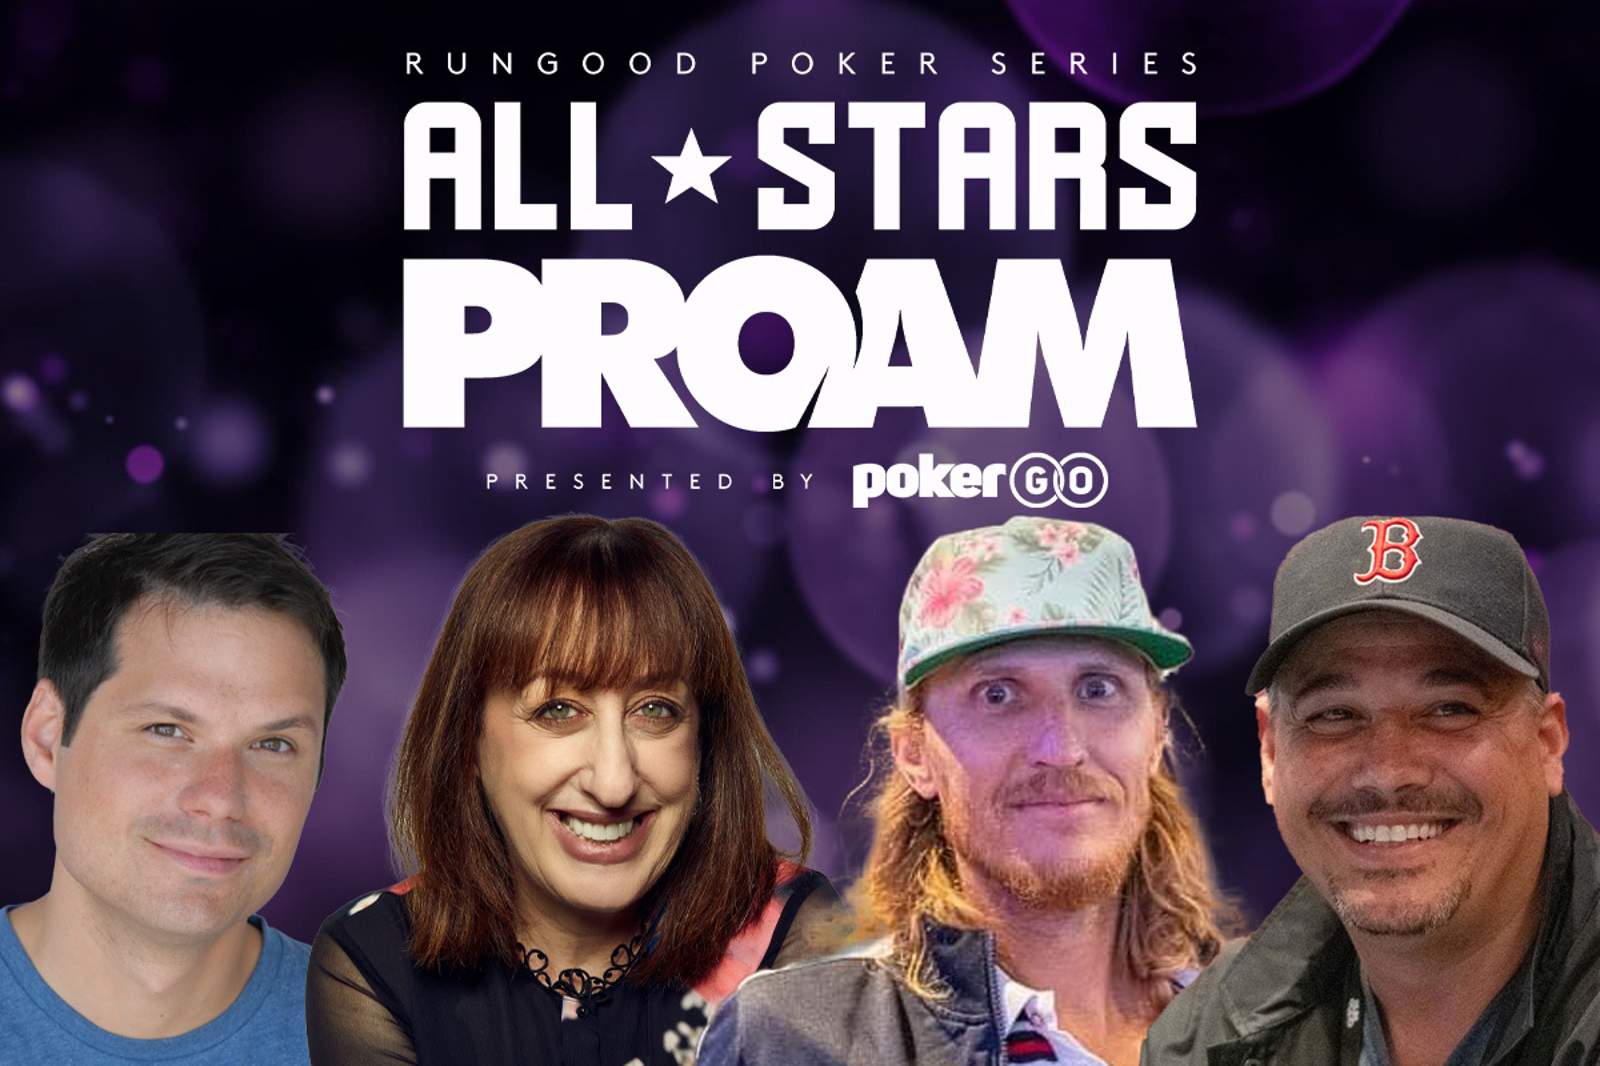 Beth Hall, Michael Ian Black, “Boston Rob” Mariano, and Tyson Apostol Highlight RunGood Poker Series All-Stars ProAM Filmed Event